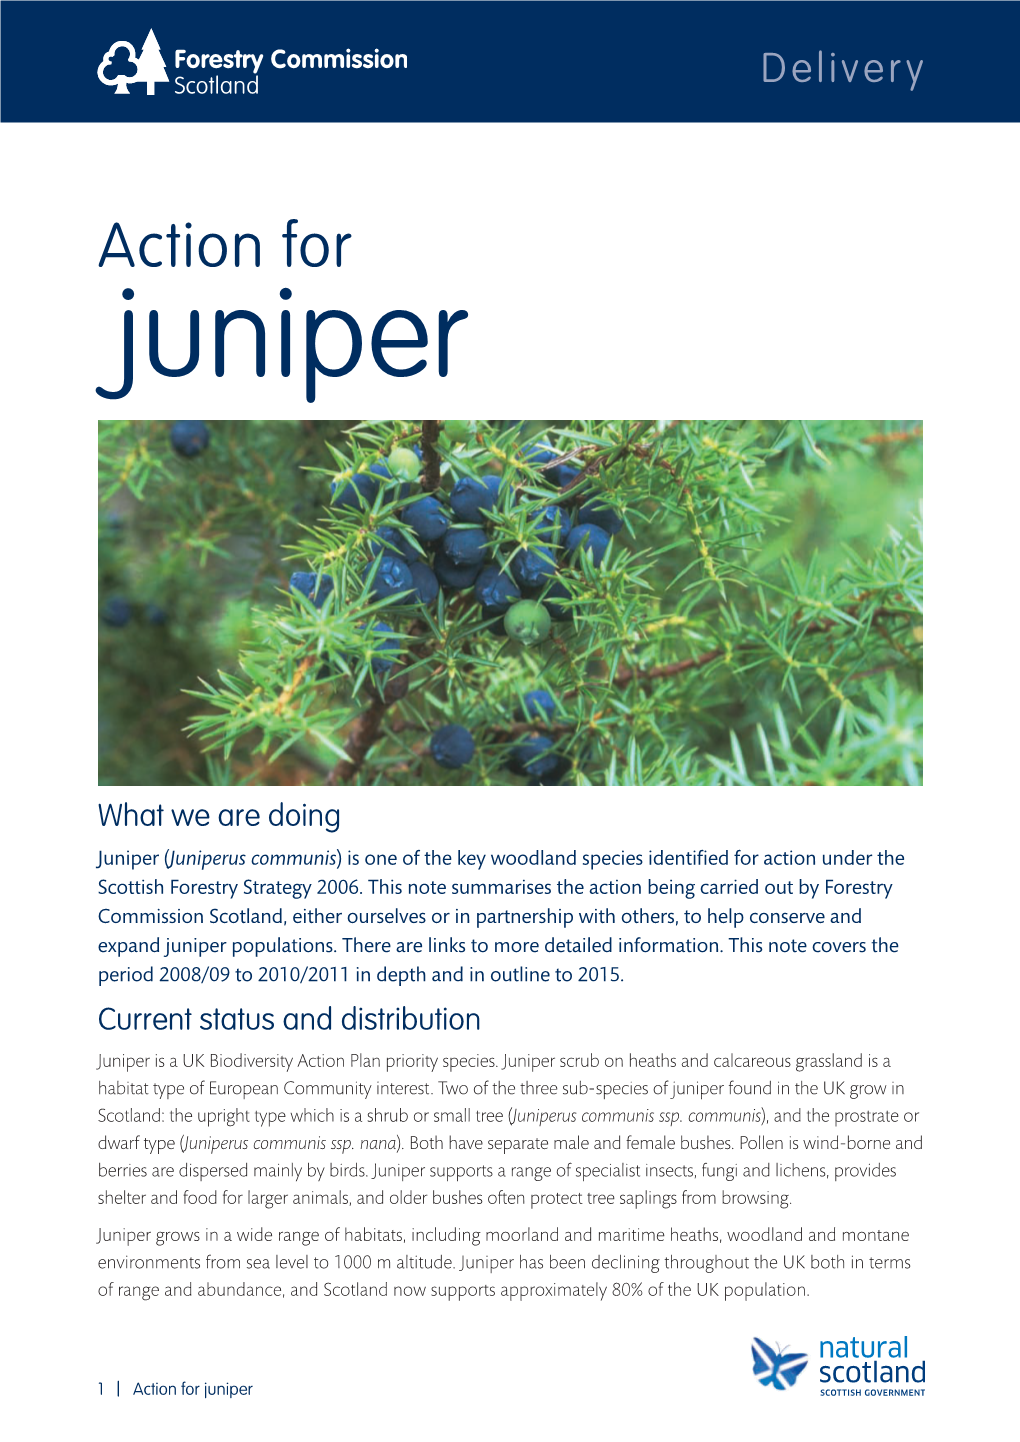 Action for Juniper